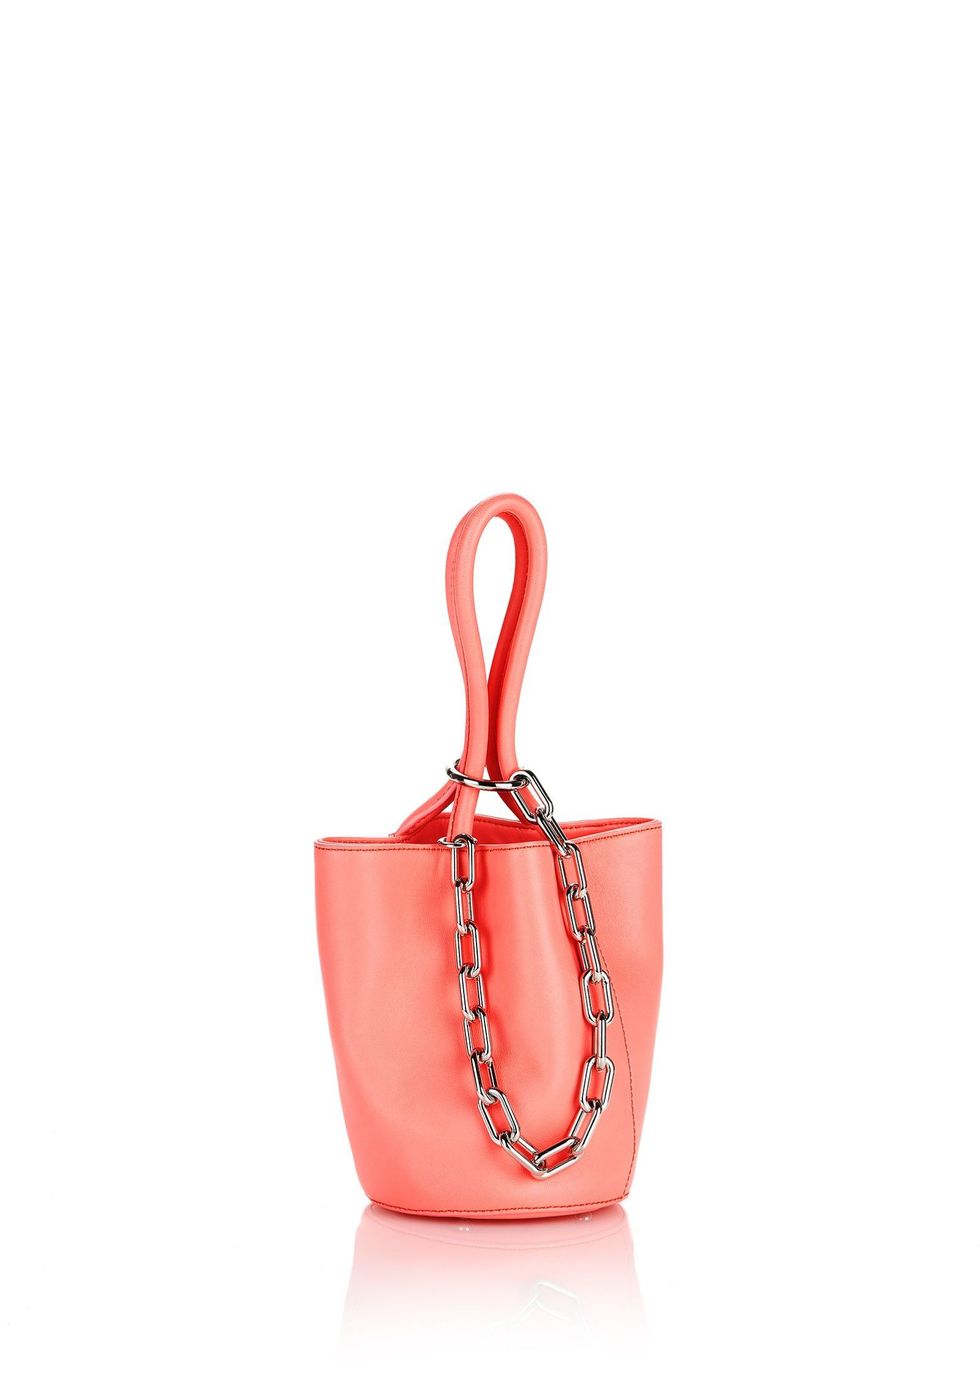 Bag, Handbag, Pink, Red, Fashion accessory, Orange, Leather, Chain, Peach, Beige, 